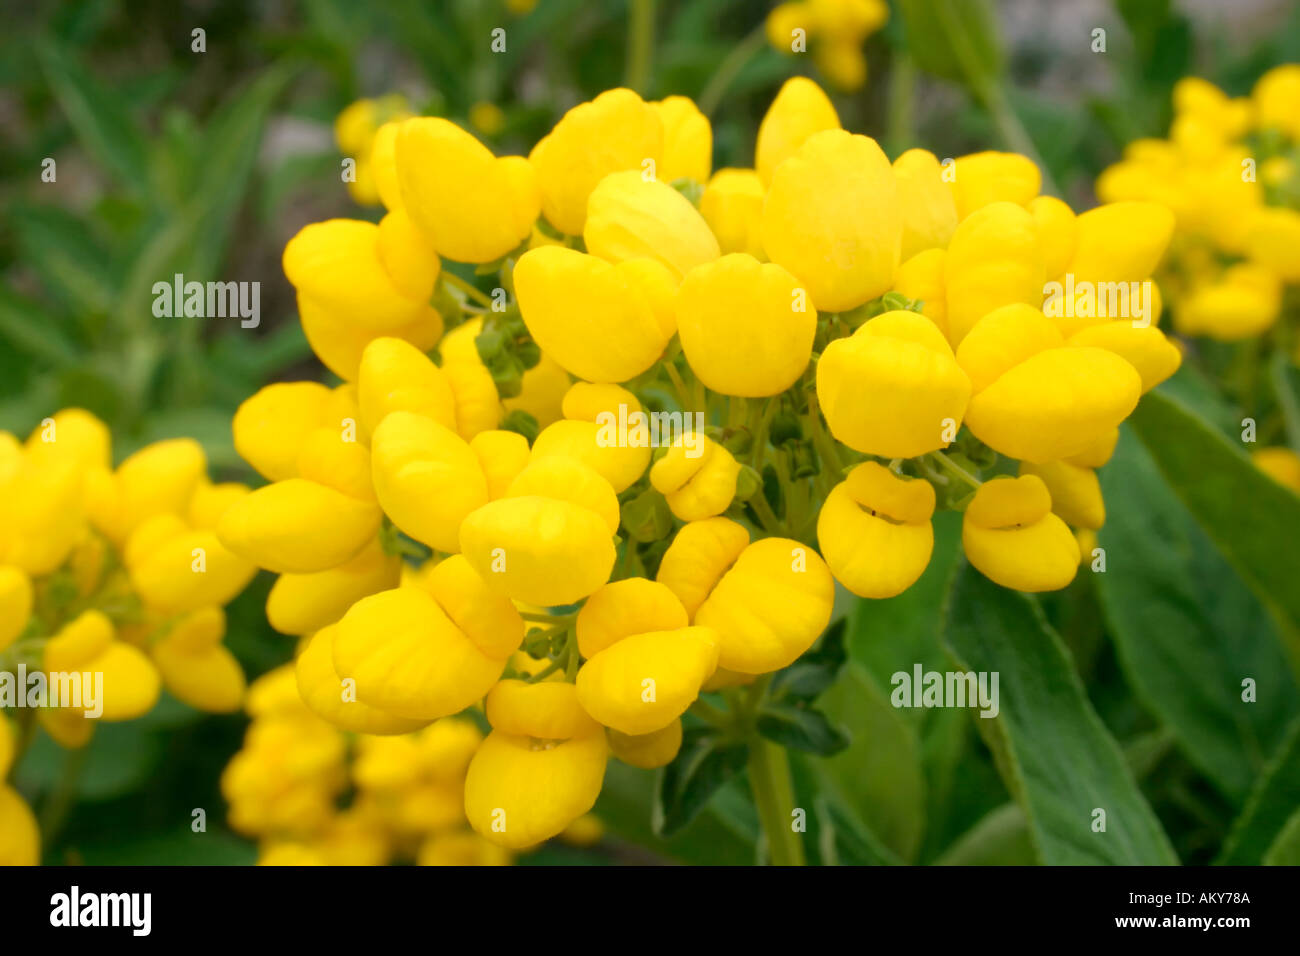 Yellow flowers of summer flowering garden plant Calceolaria integrifolia or Slipper Flower or Ladys Slipper Stock Photo